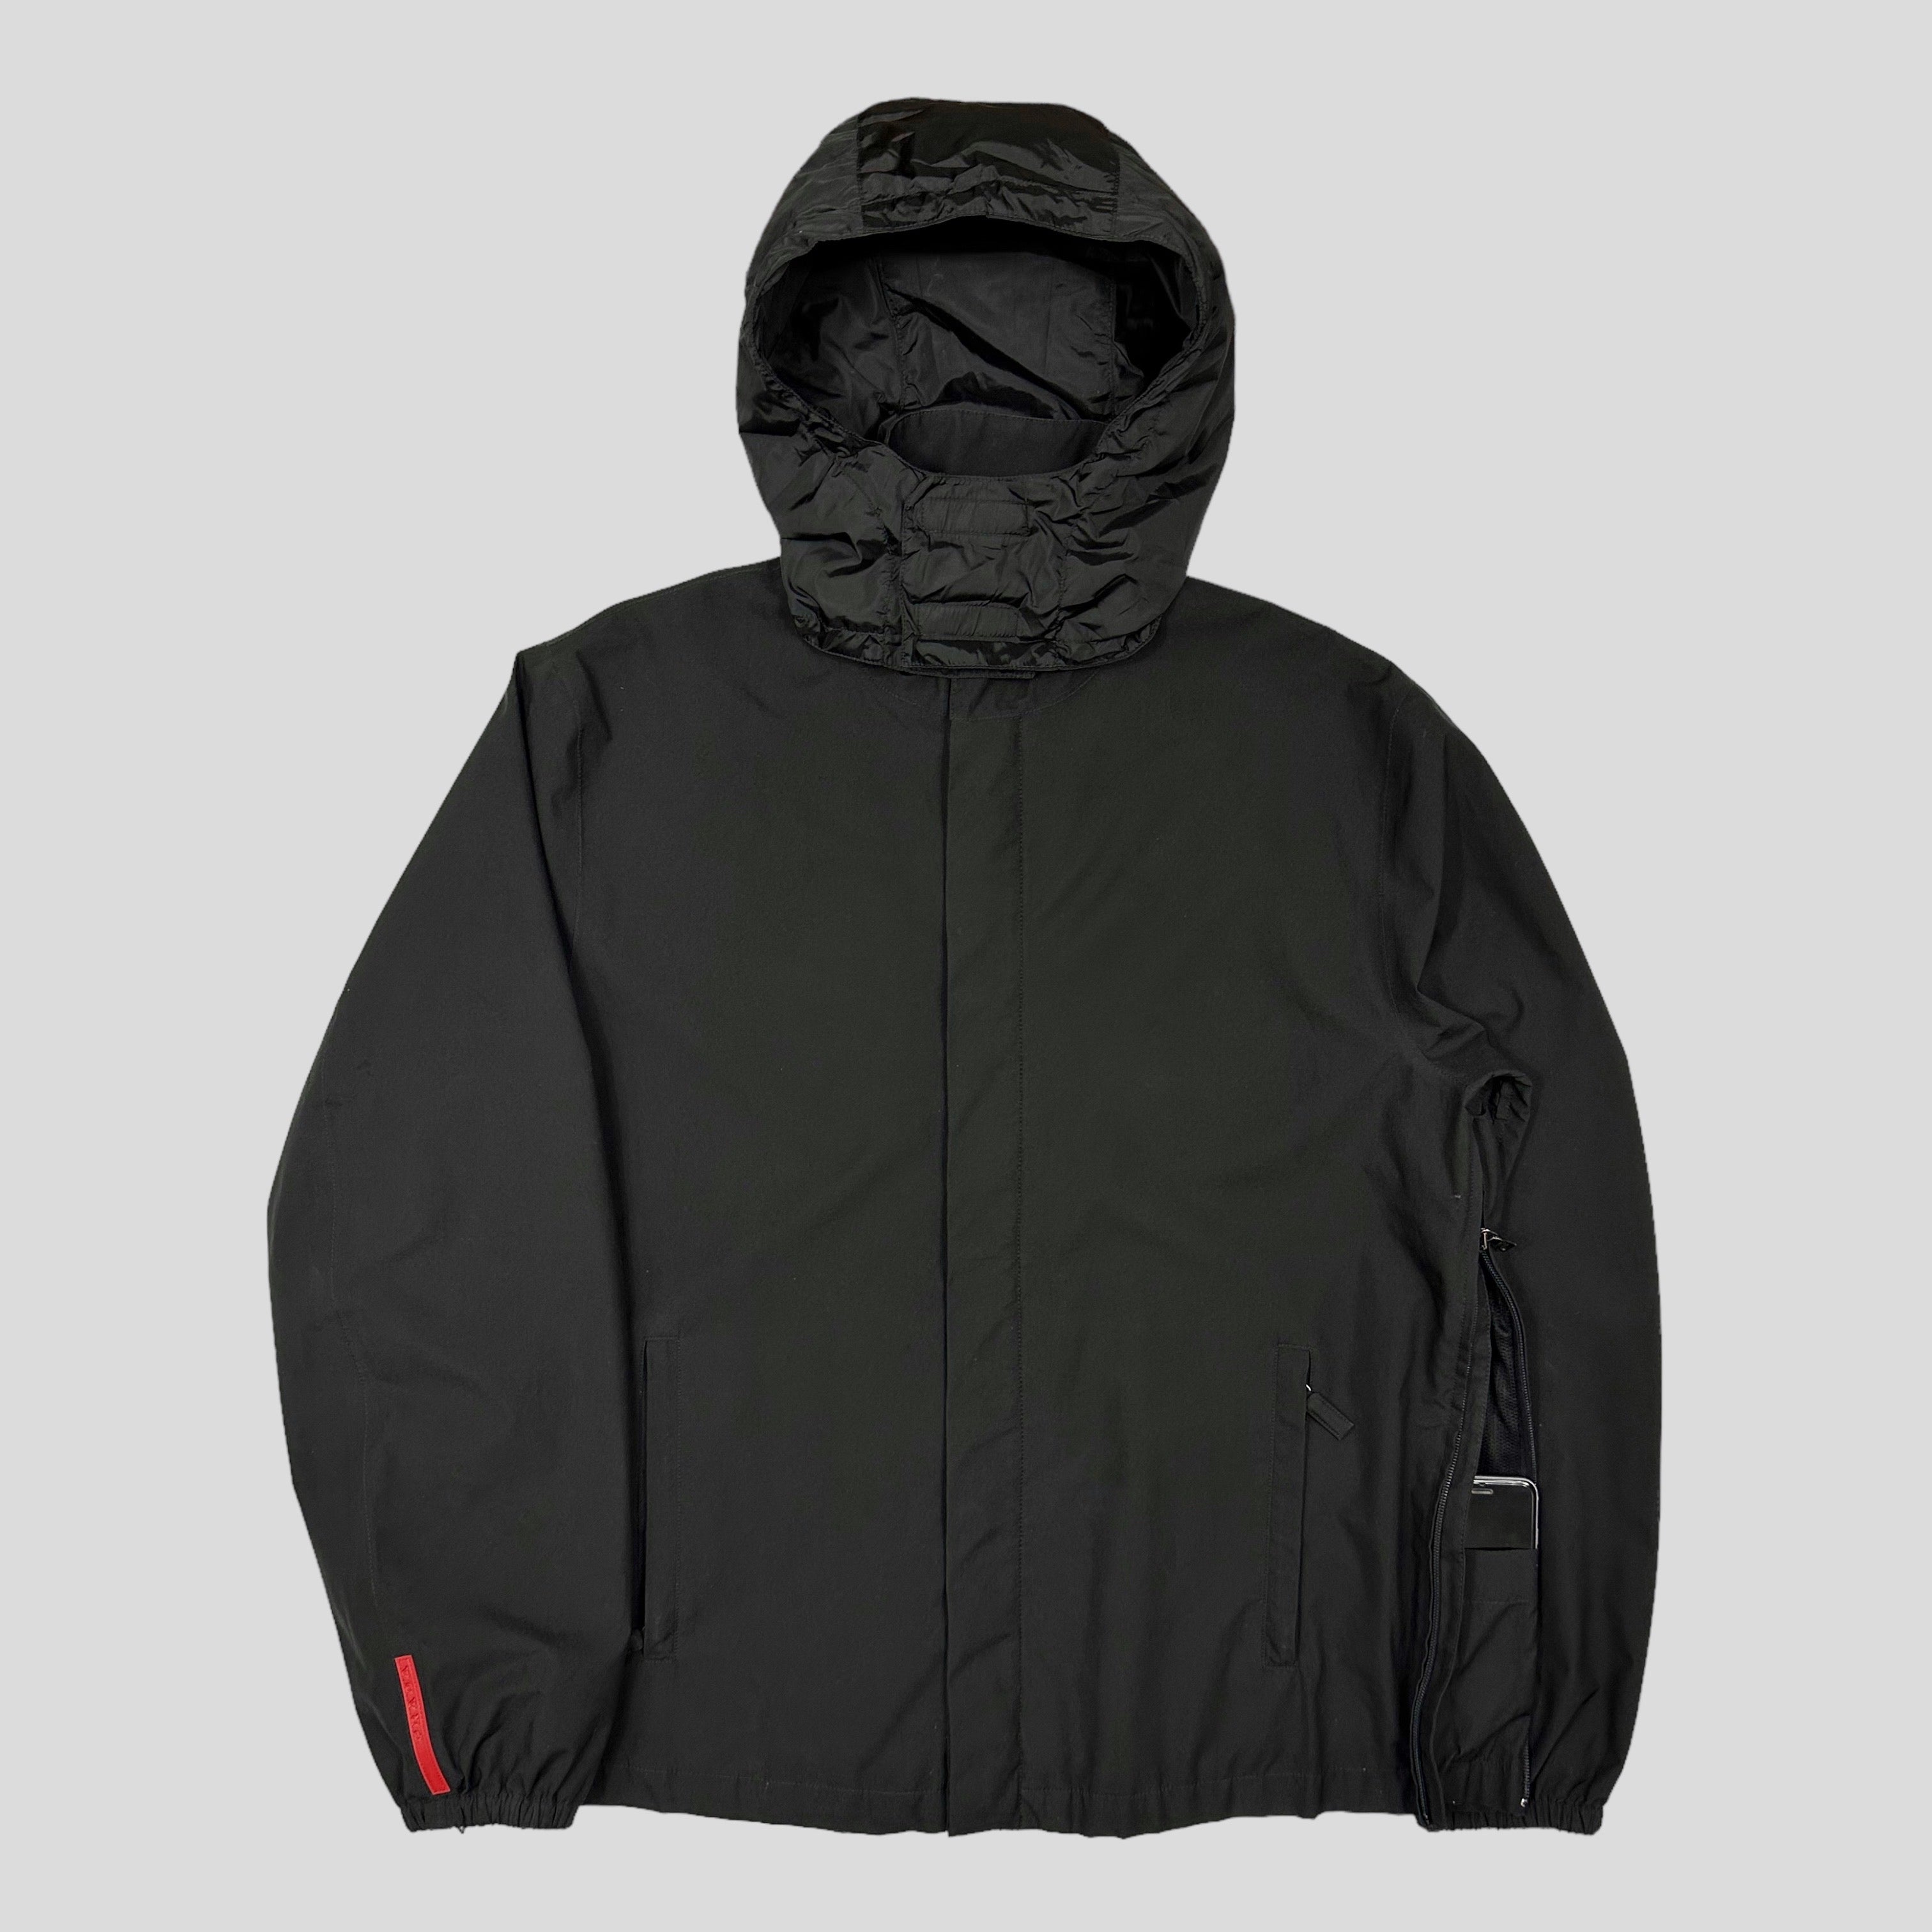 Prada AW01 Insulated Goretex Jacket with Nylon Pocket Hood - L/XL